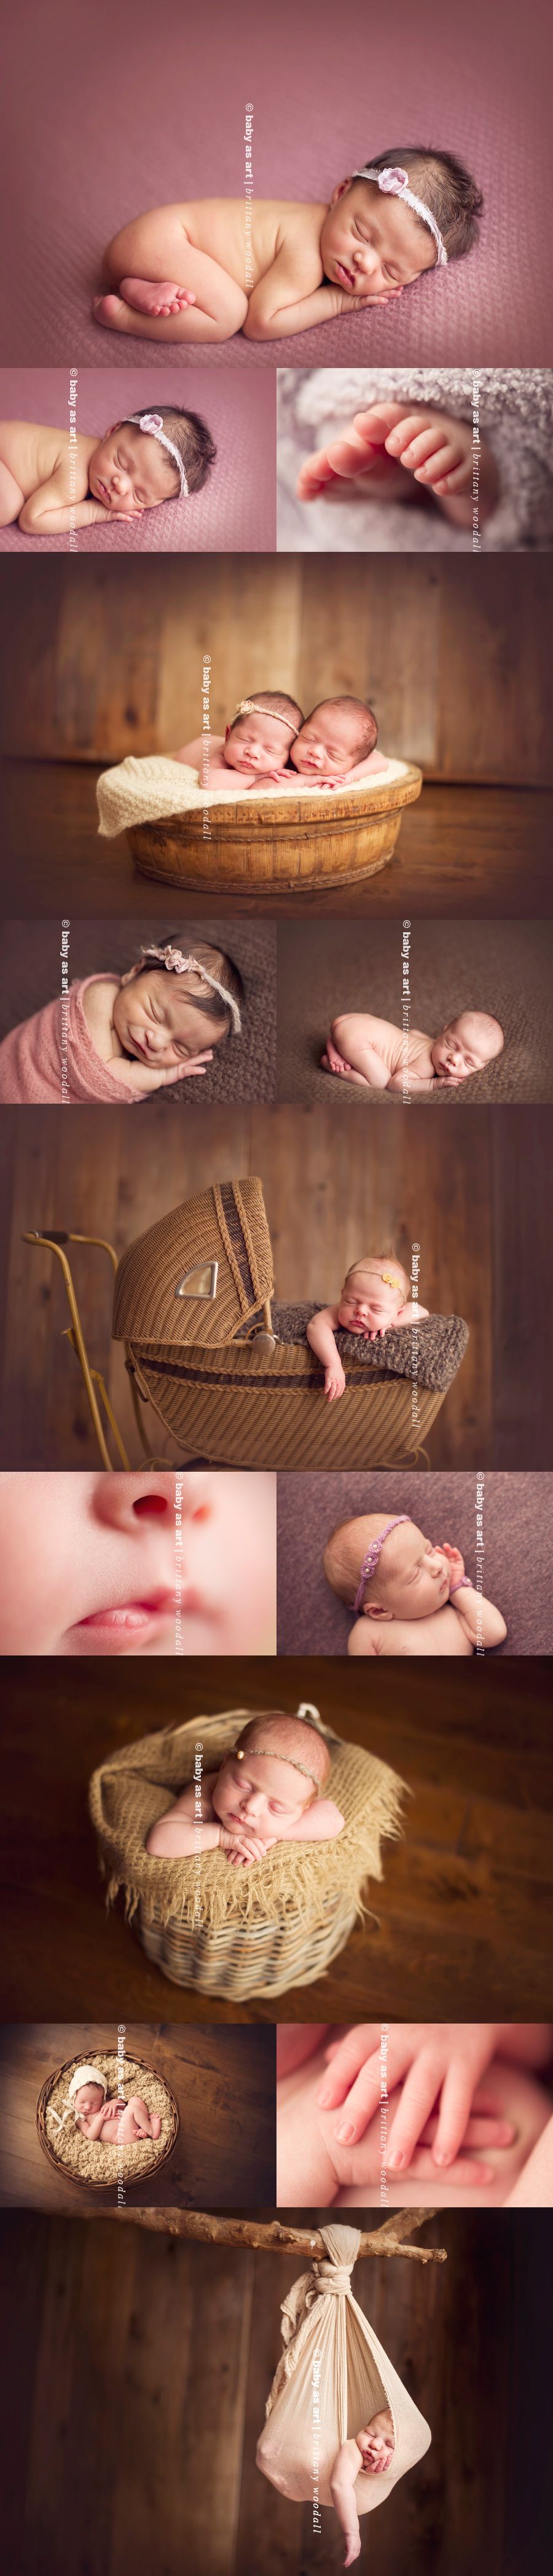 wonderful baby portraits!